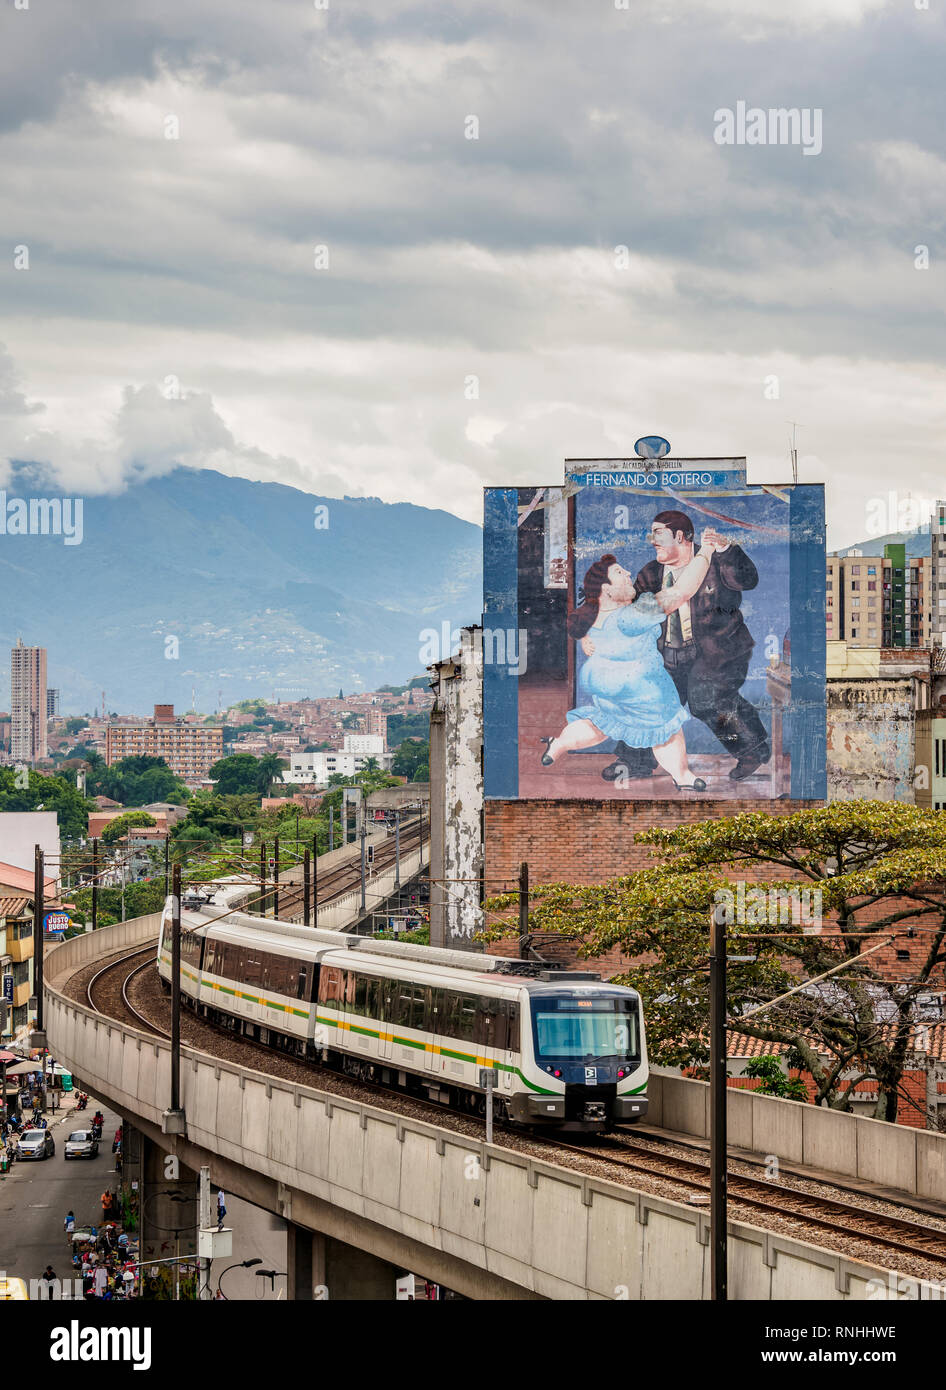 Metro Train leaving Parque Berrio Station, Fernando Botero Mural Painting, Medellin, Antioquia Department, Colombia Stock Photo